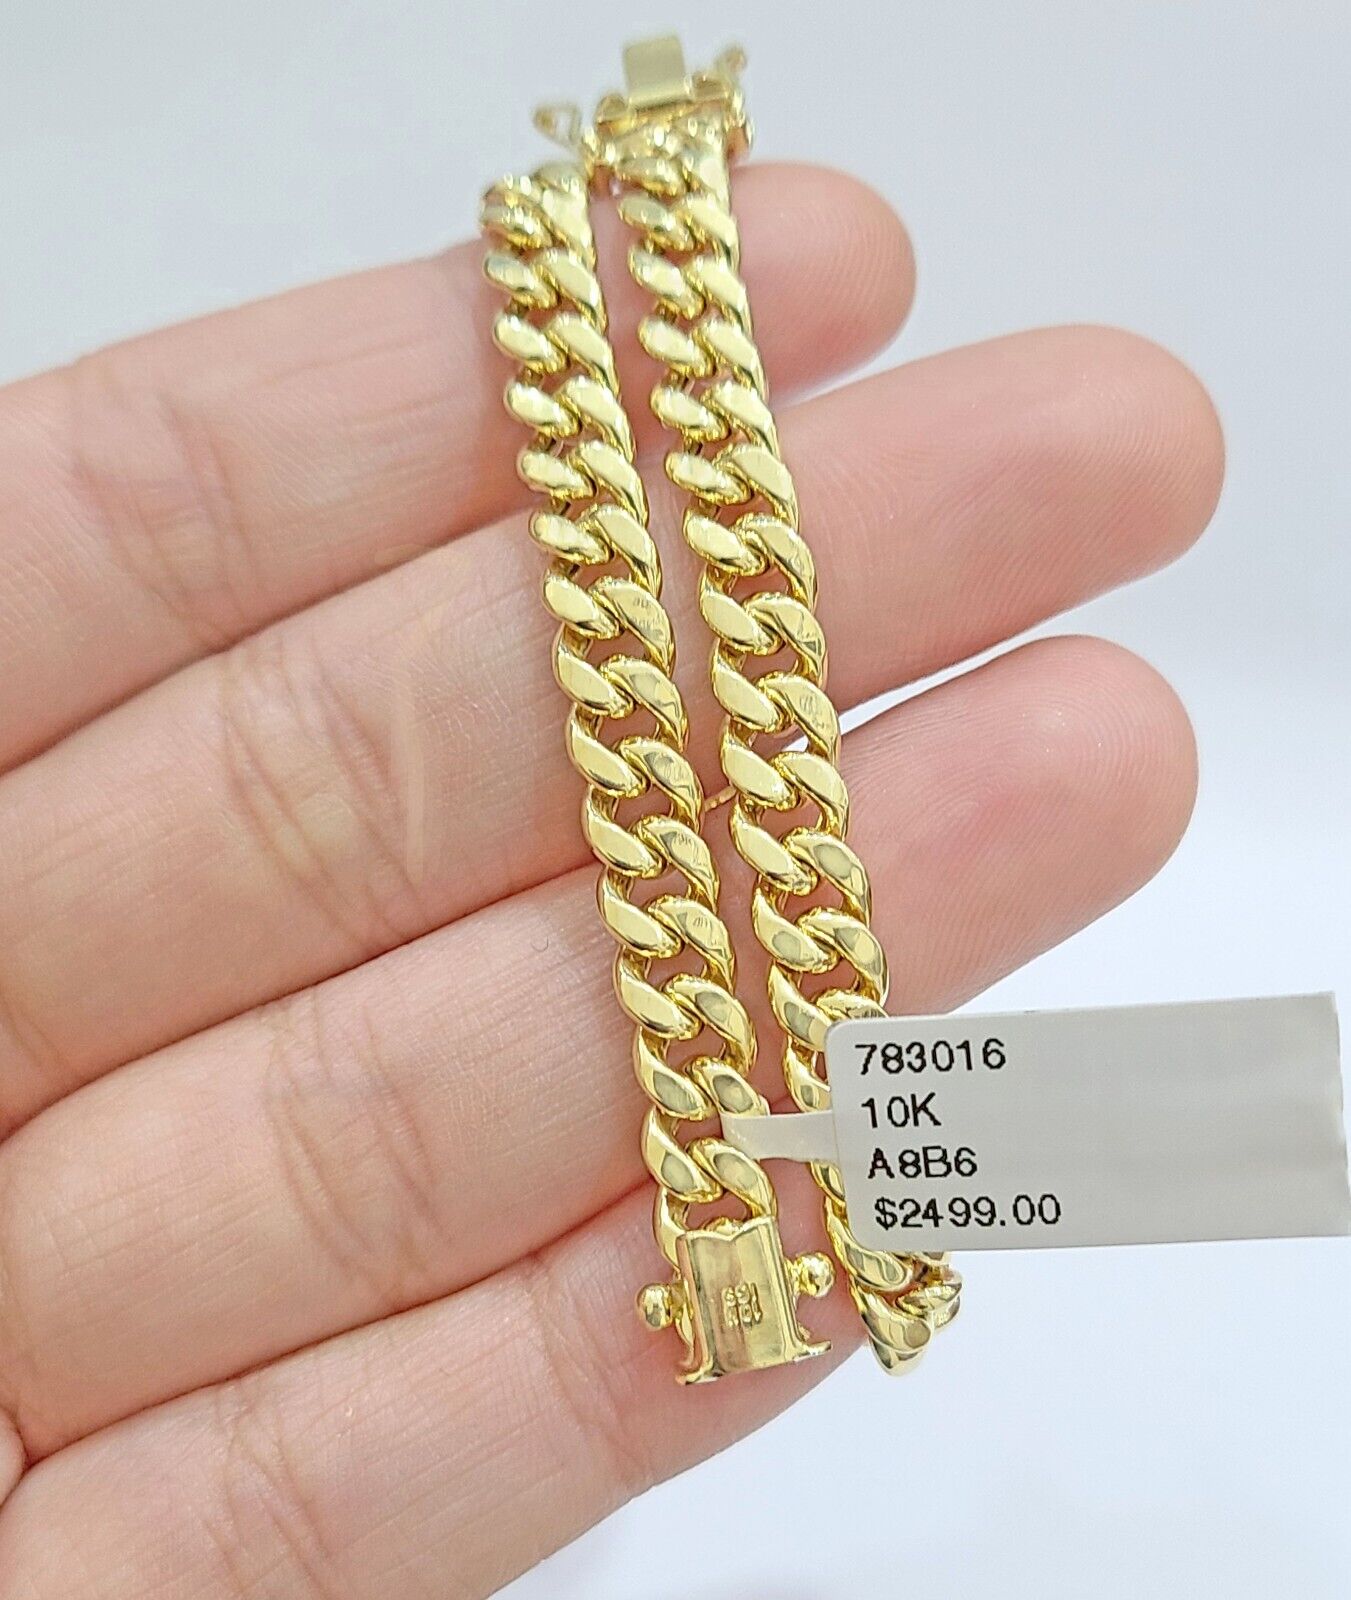 Real 10k Yellow Gold Miami Cuban Link Bracelet 7.5" inch 6mm Box Lock Men Women